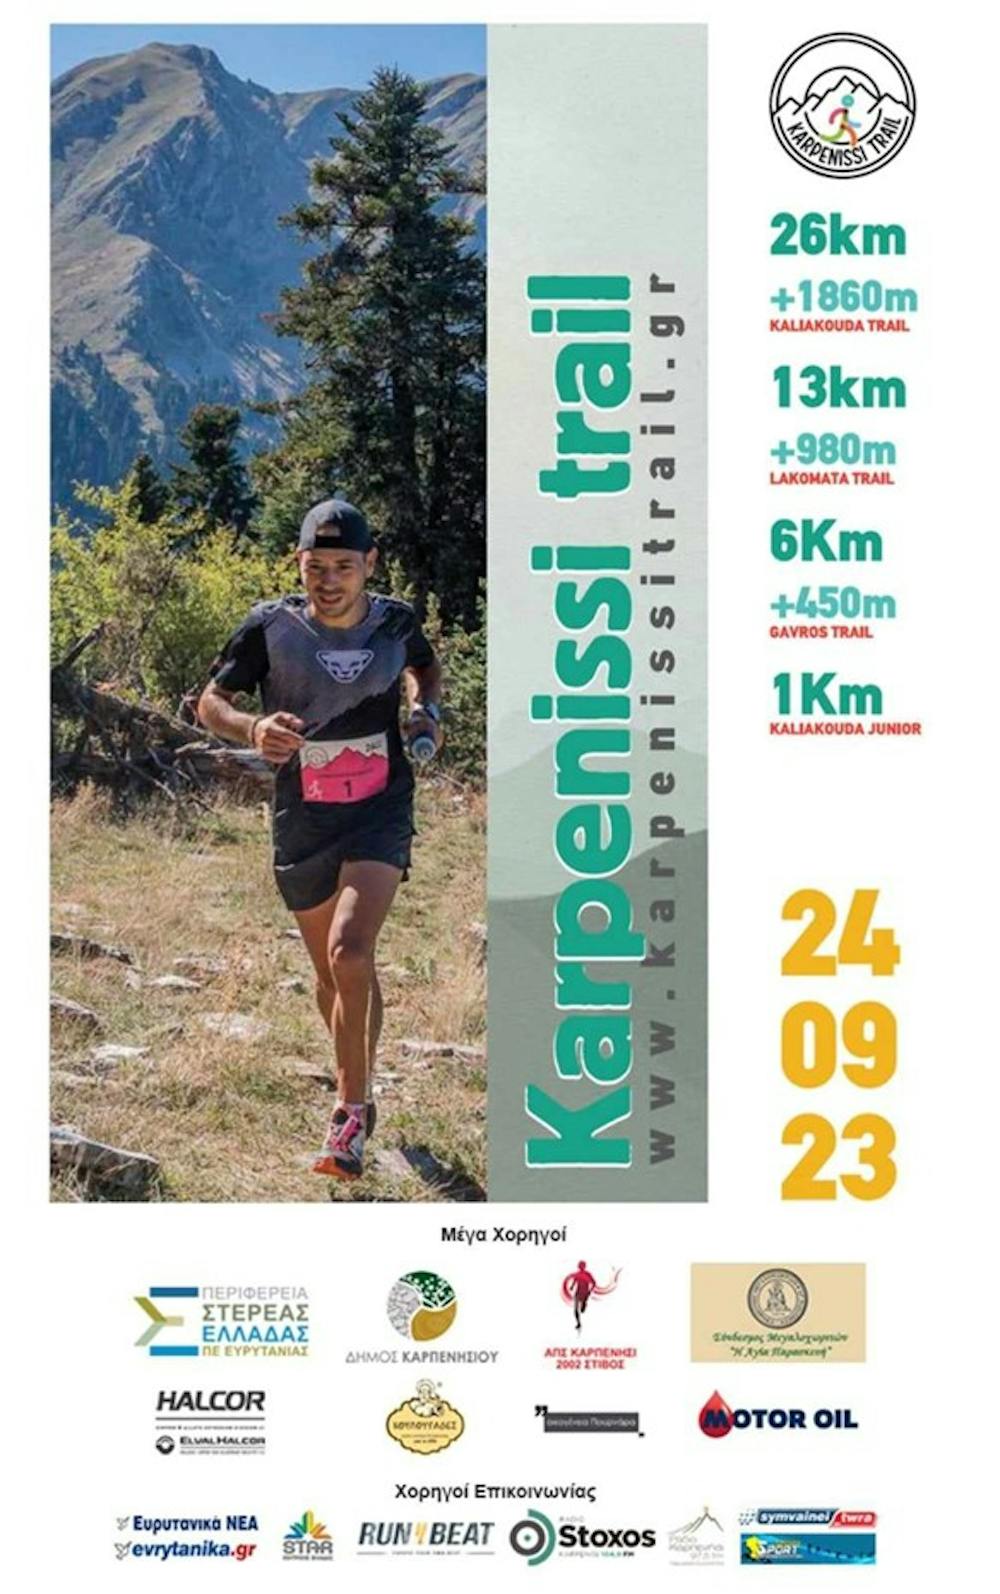 Karpenissi Trail: Αγώνες Ορεινού Τρεξίματος… και όχι μόνο! runbeat.gr 